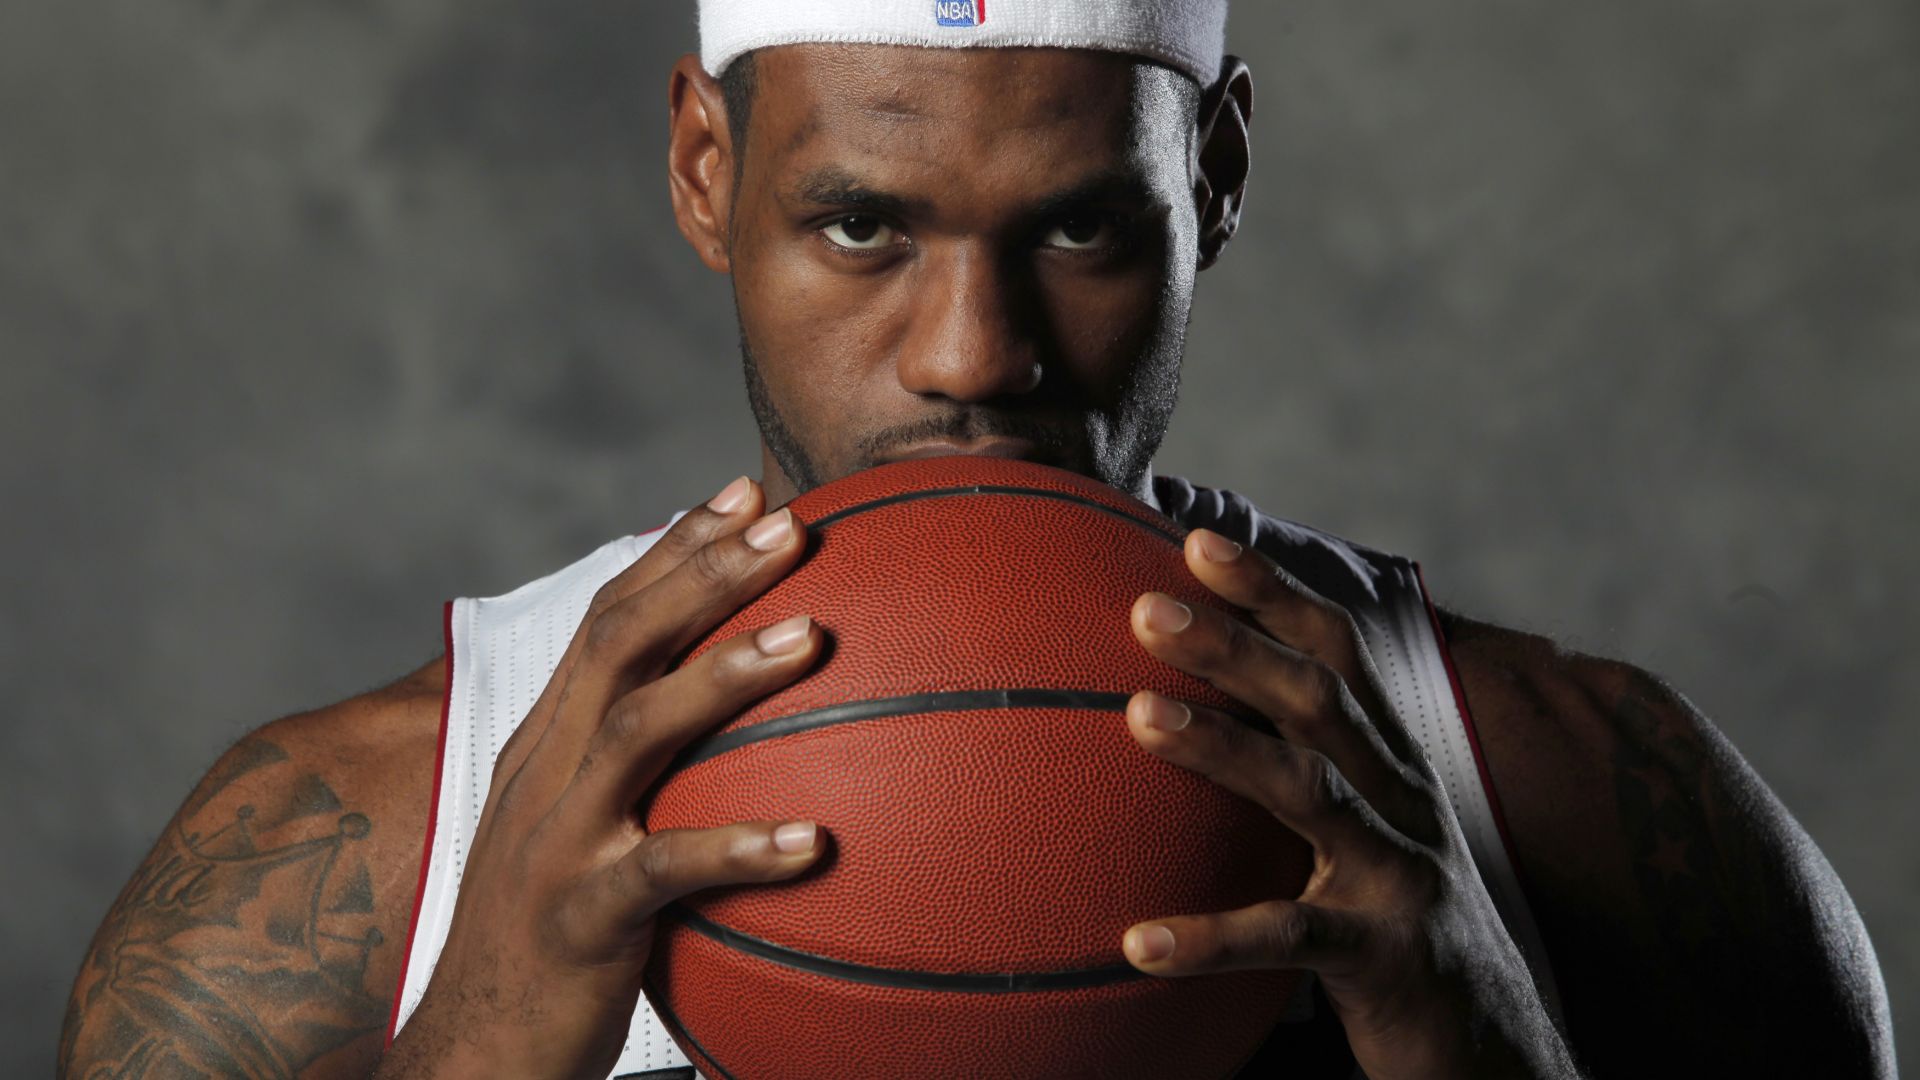 Wallpaper Basketball player, Lebron James,NBA, Cleveland Cavaliers